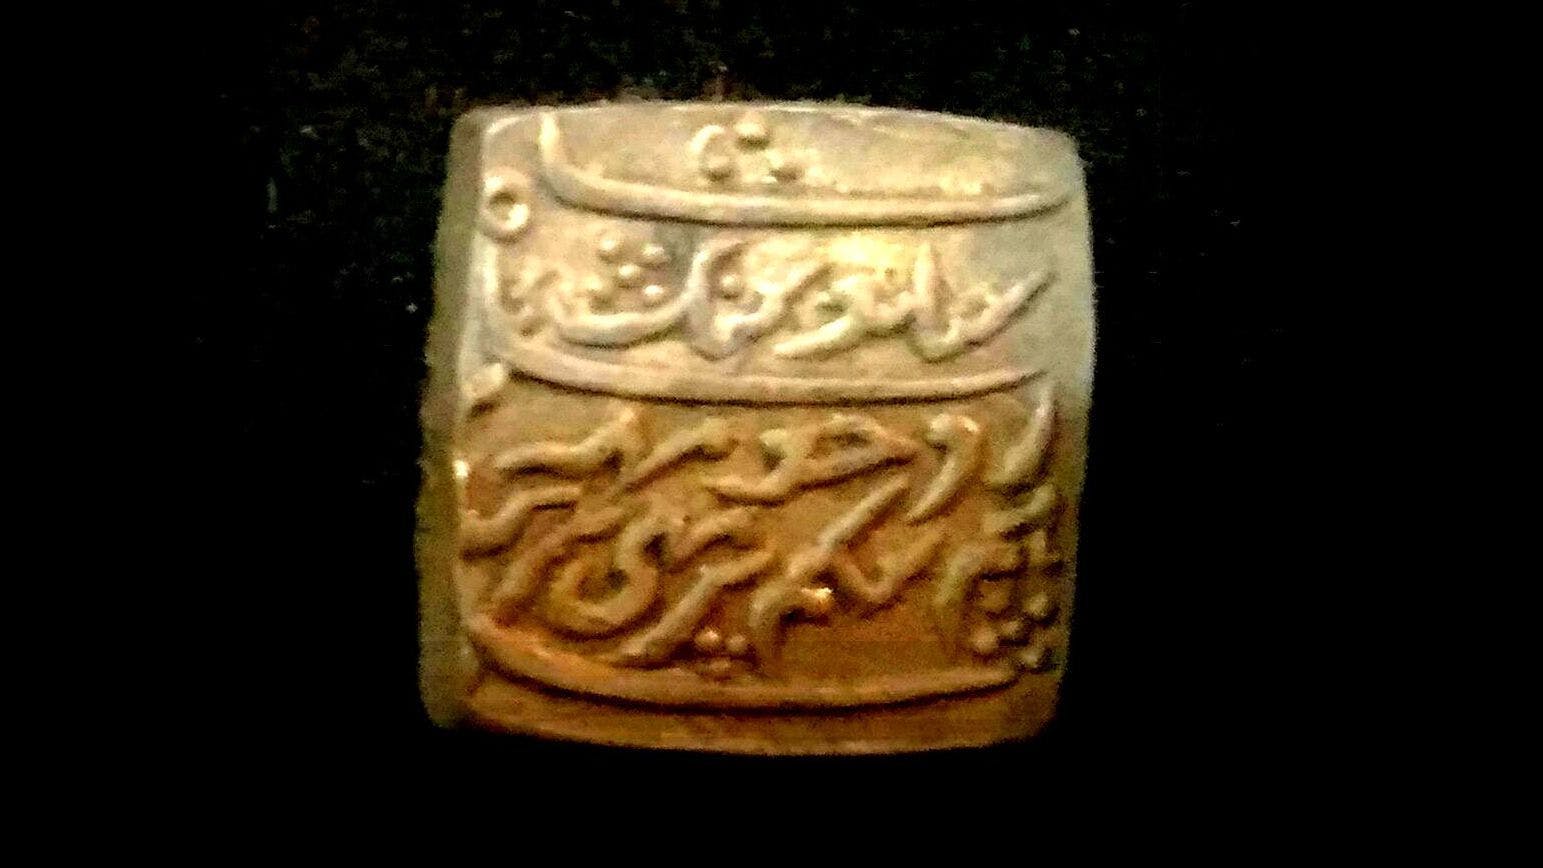 Square Urdu coin of Rajeswara Singha